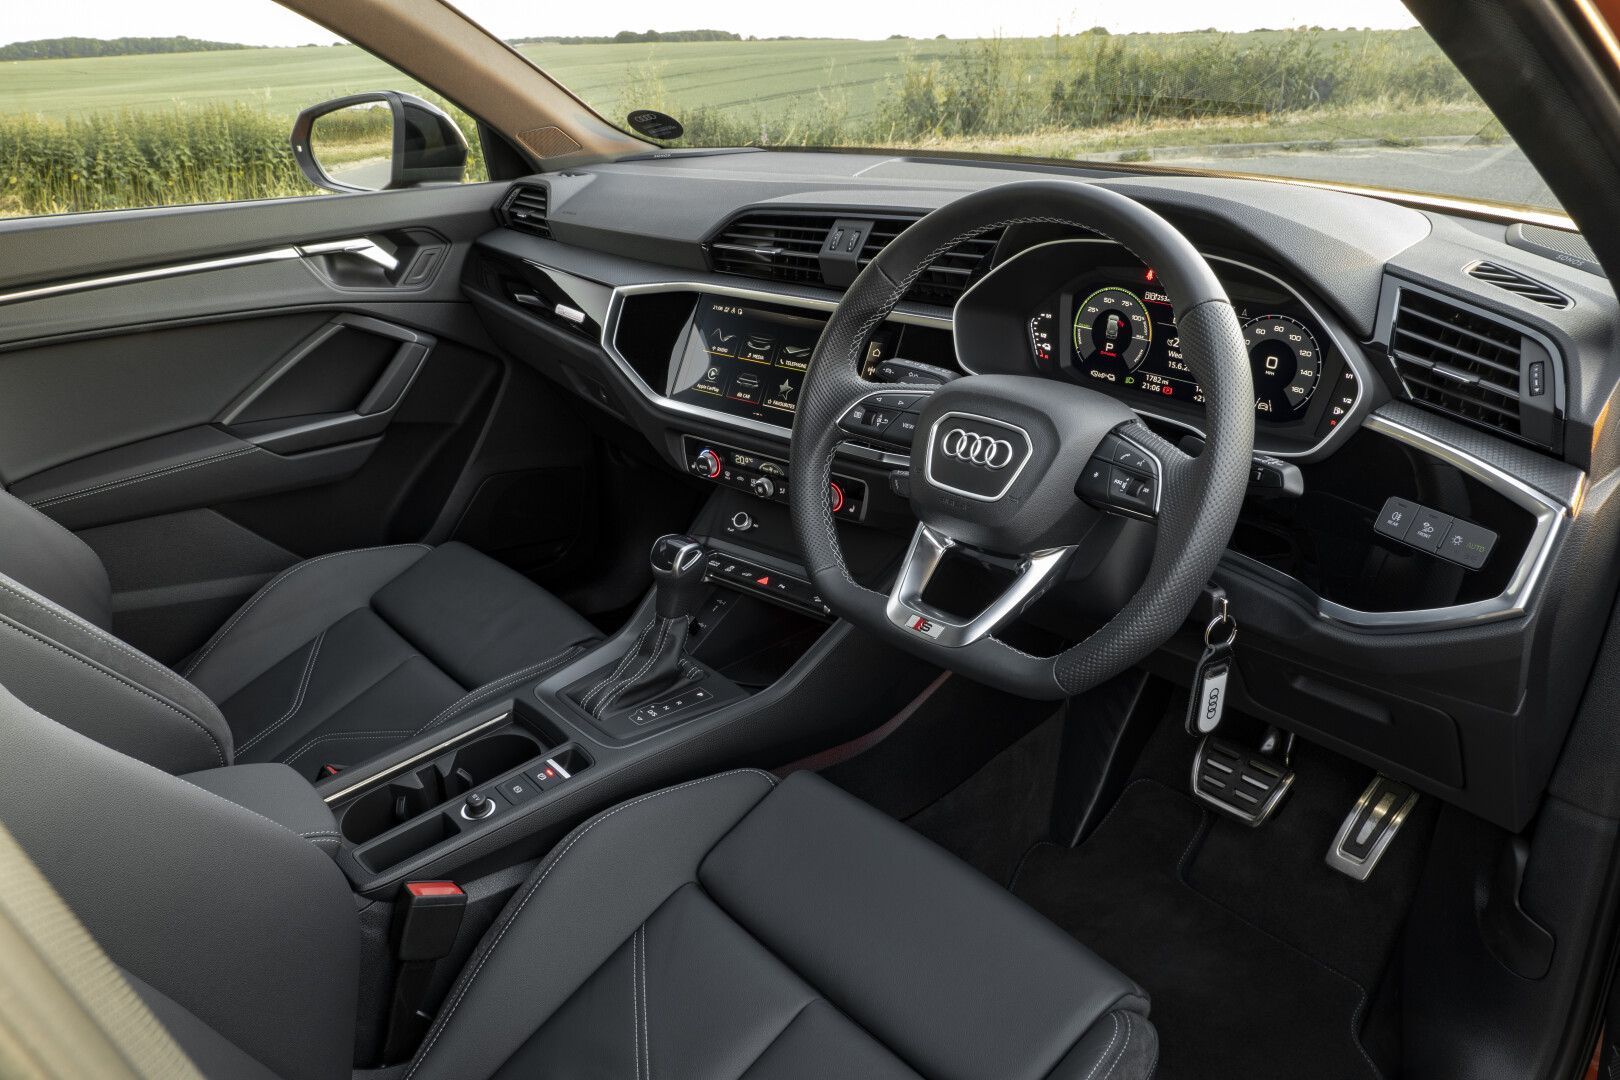 Audi Q3 Urban Edition driver view of dashboard